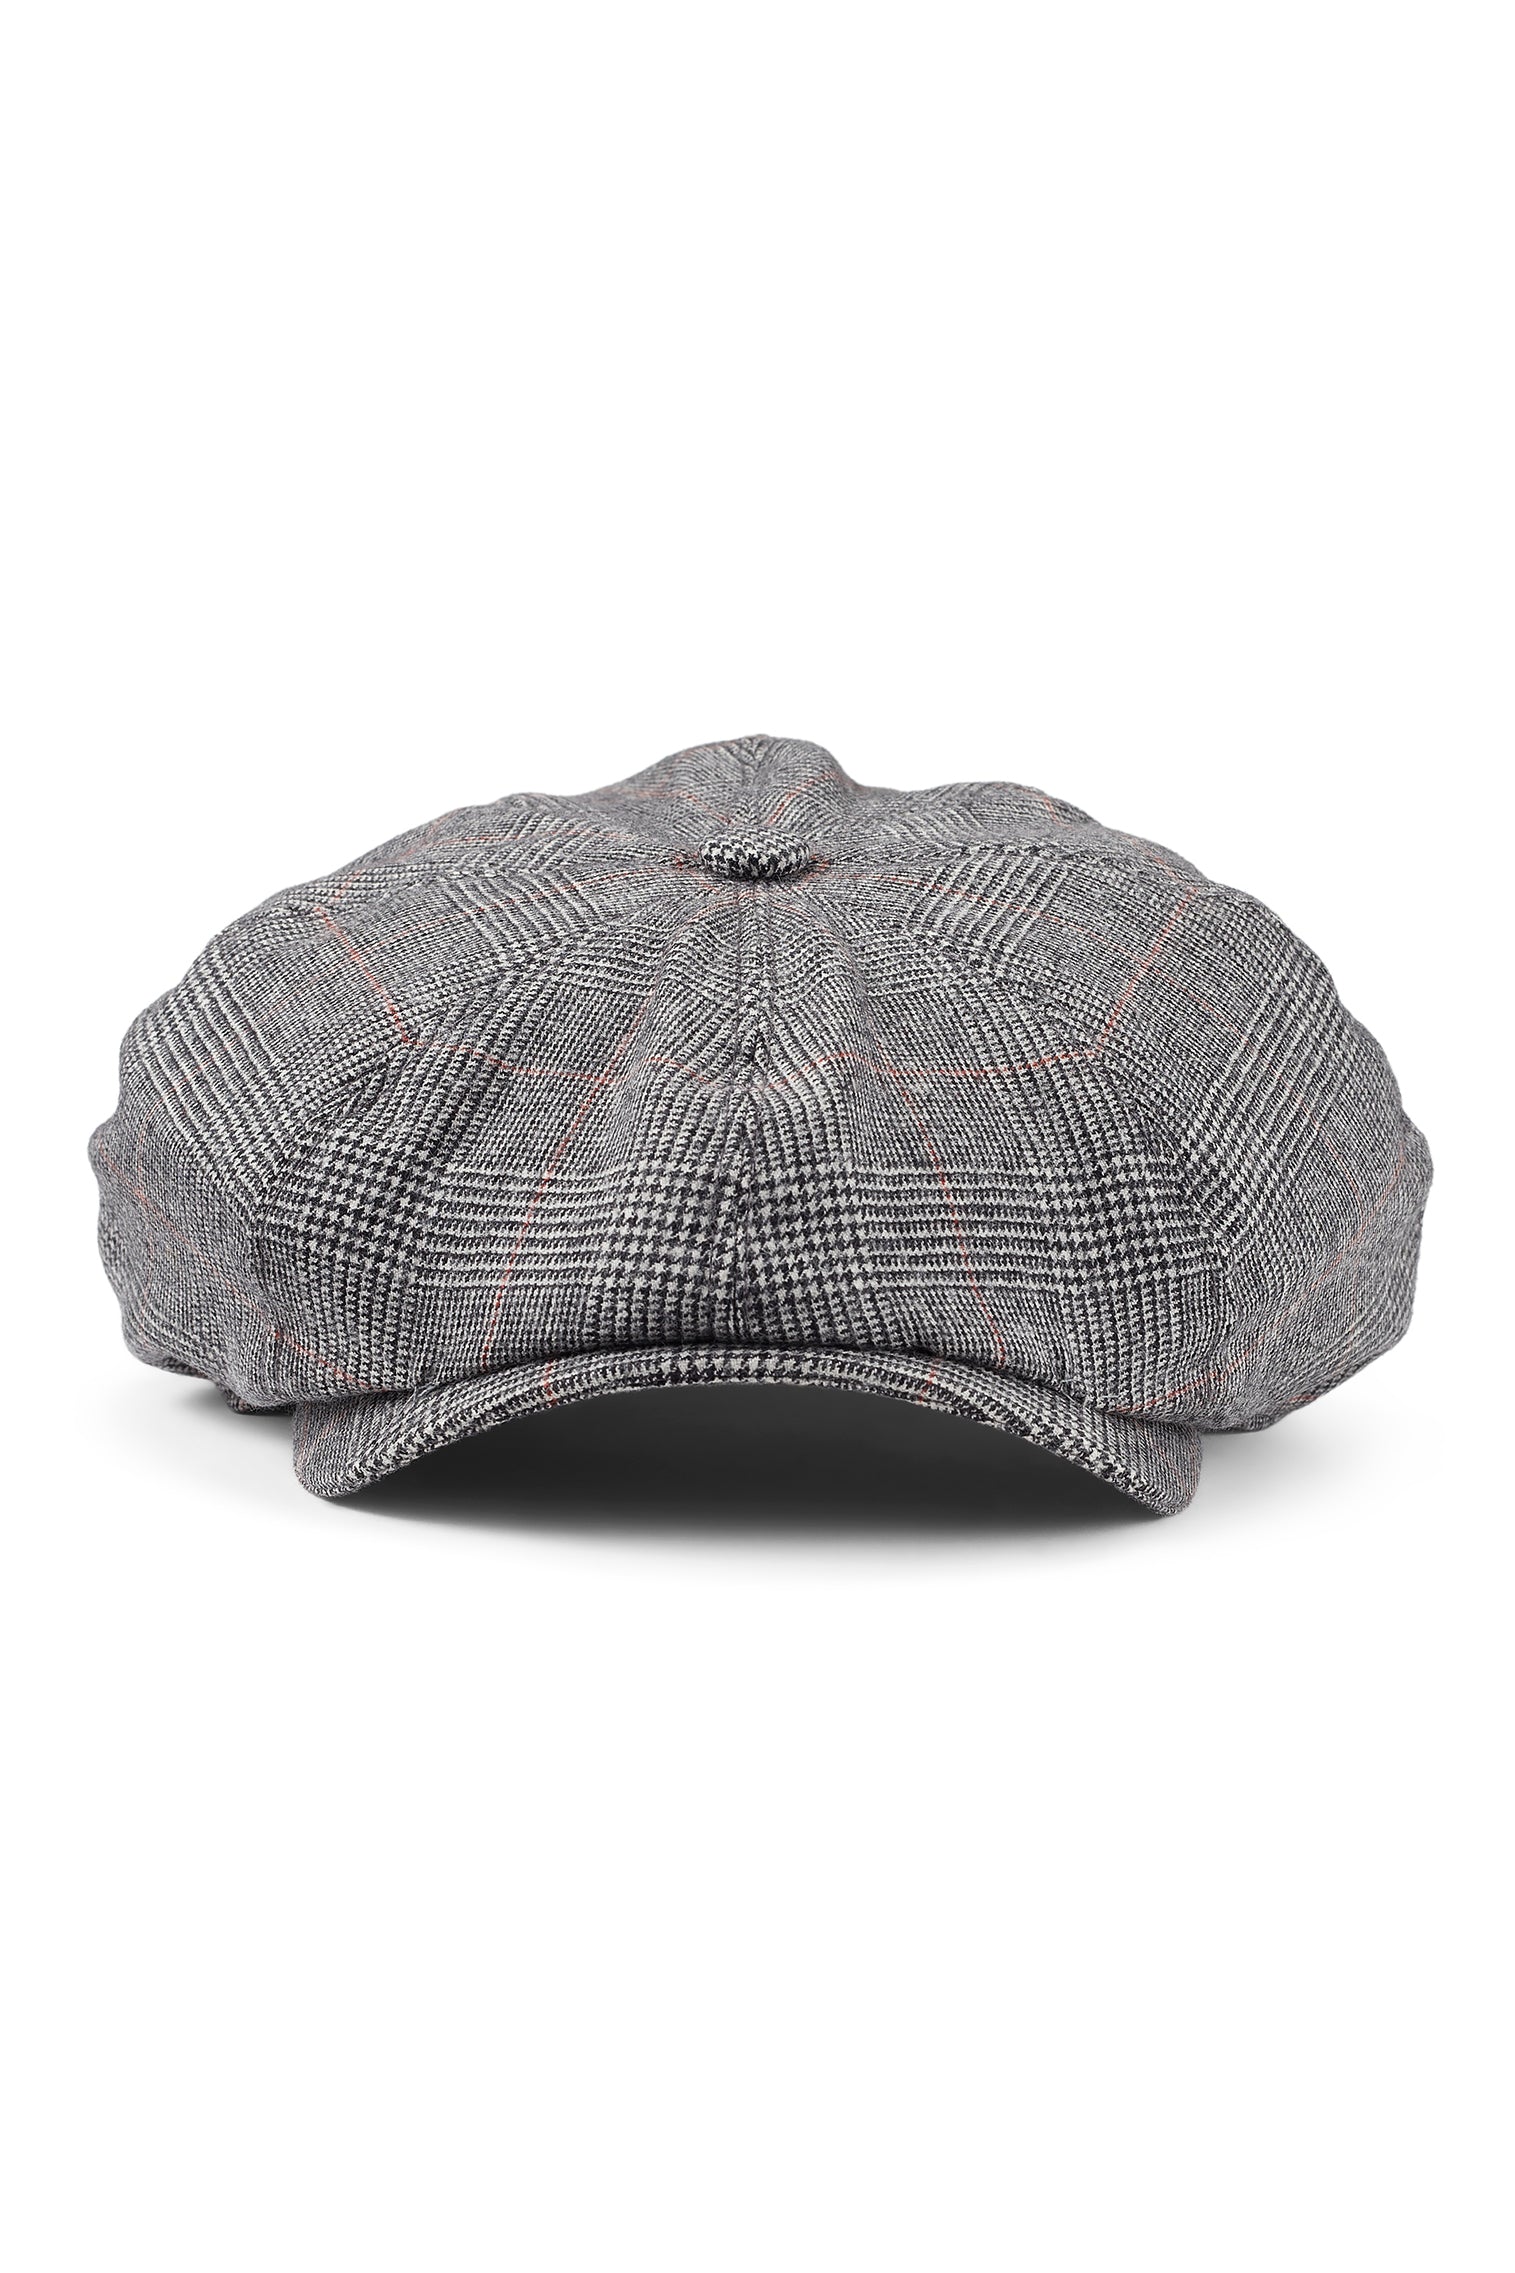 Highgrove Grey Bakerboy Cap - New Season Hat Collection - Lock & Co. Hatters London UK